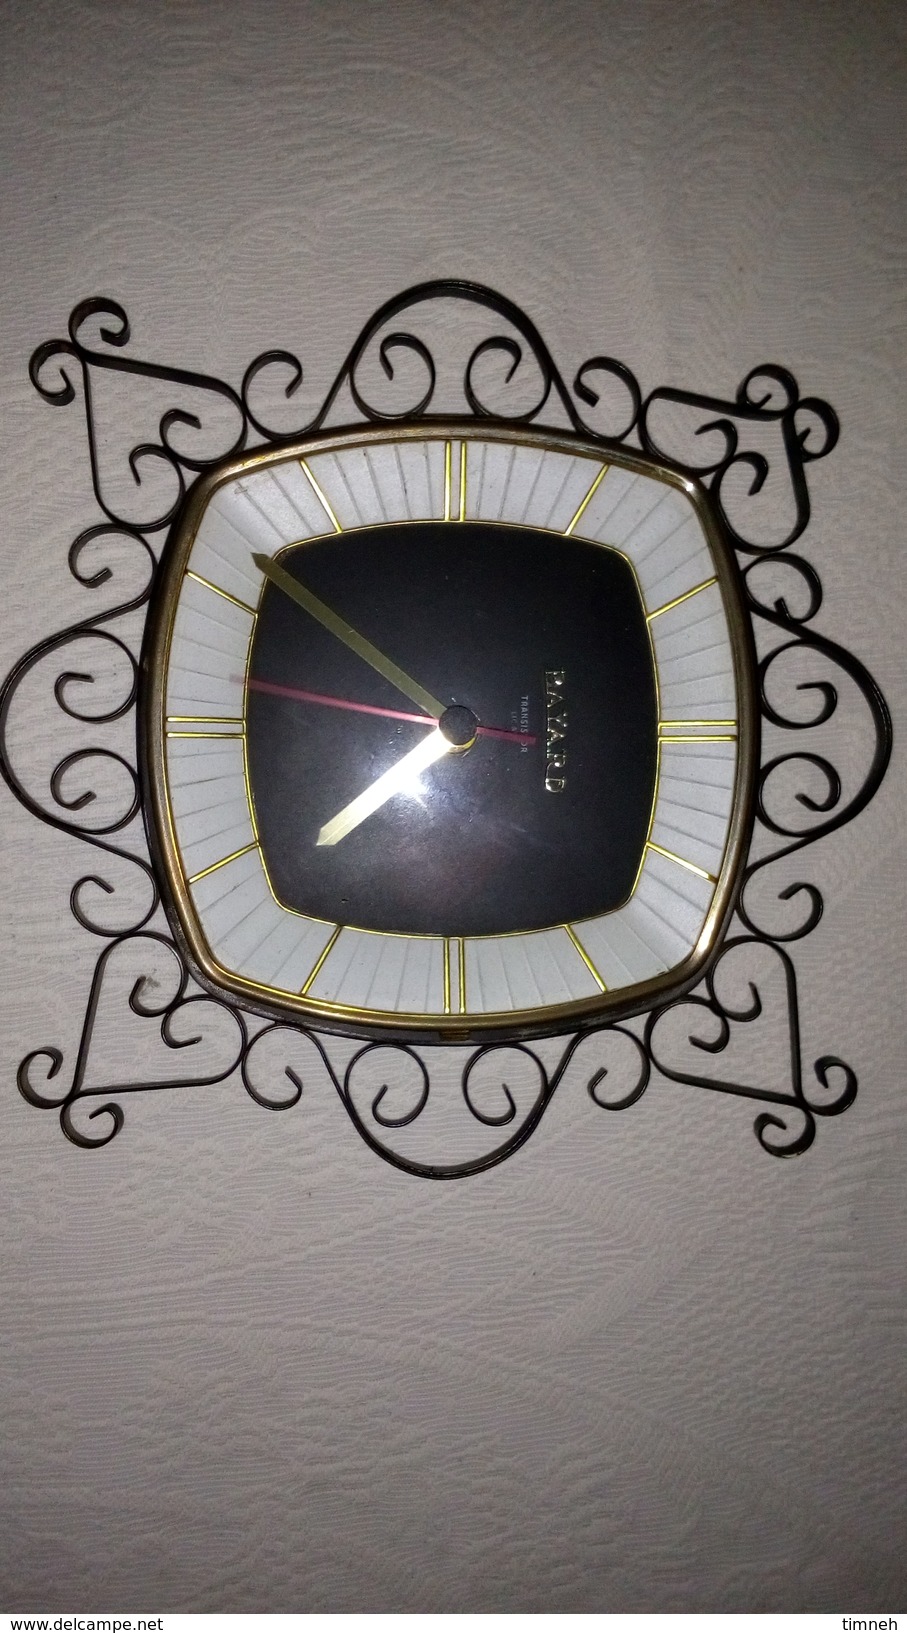 BAYARD TRANSISTOR - HORLOGE MURALE - CADRAN NOIR 16x15cm - DECO Fer Forgé (4cm) - FONCTIONNE - RETRO - Clocks